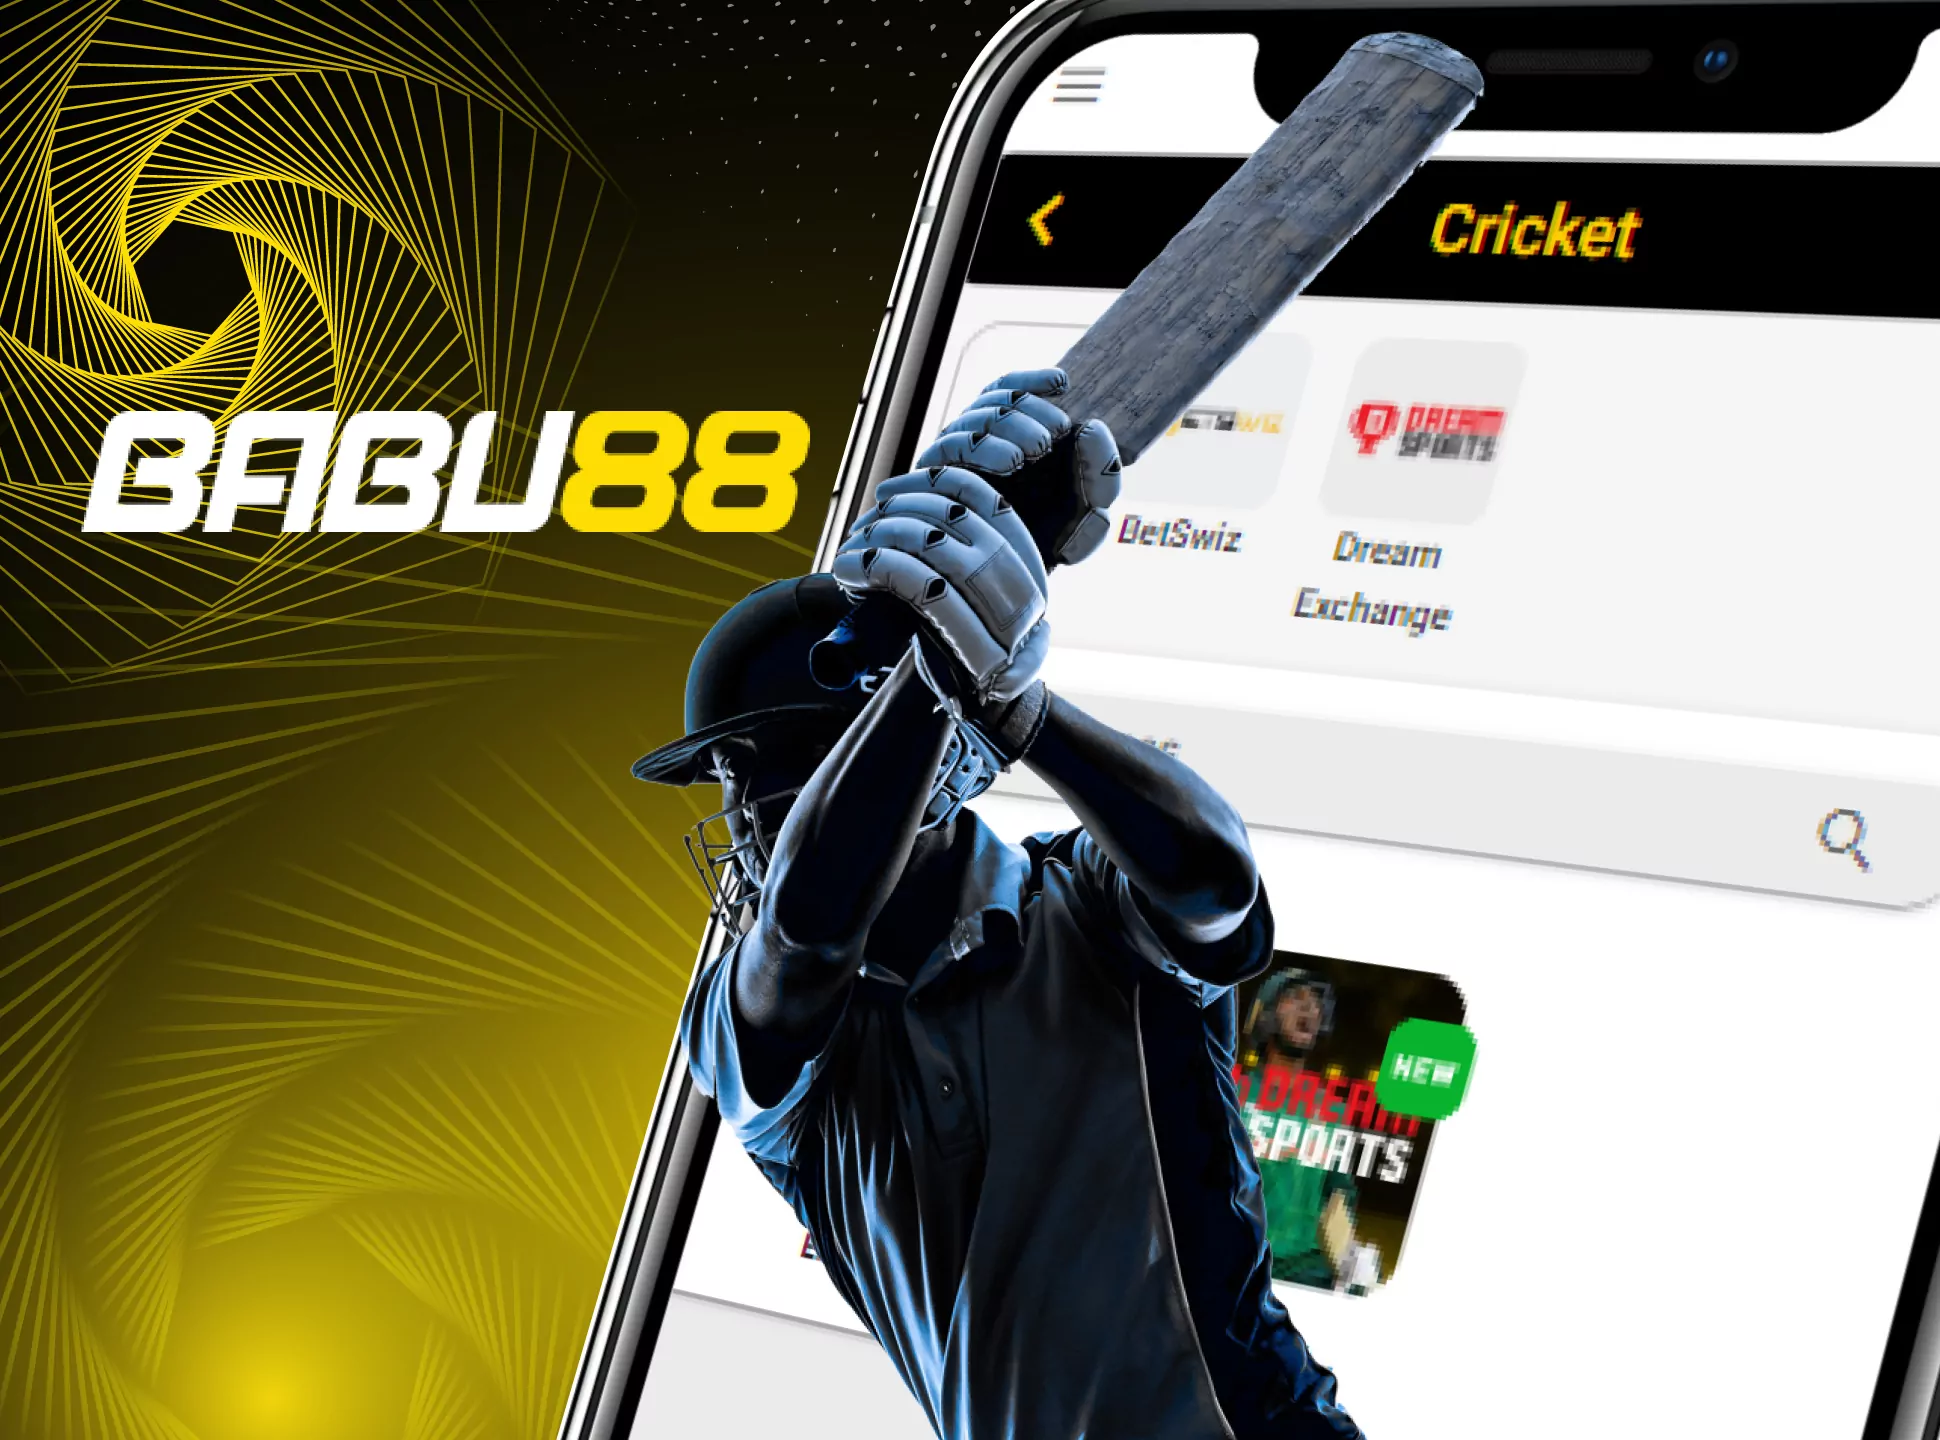 The Babu88 app has a wide cricket line.